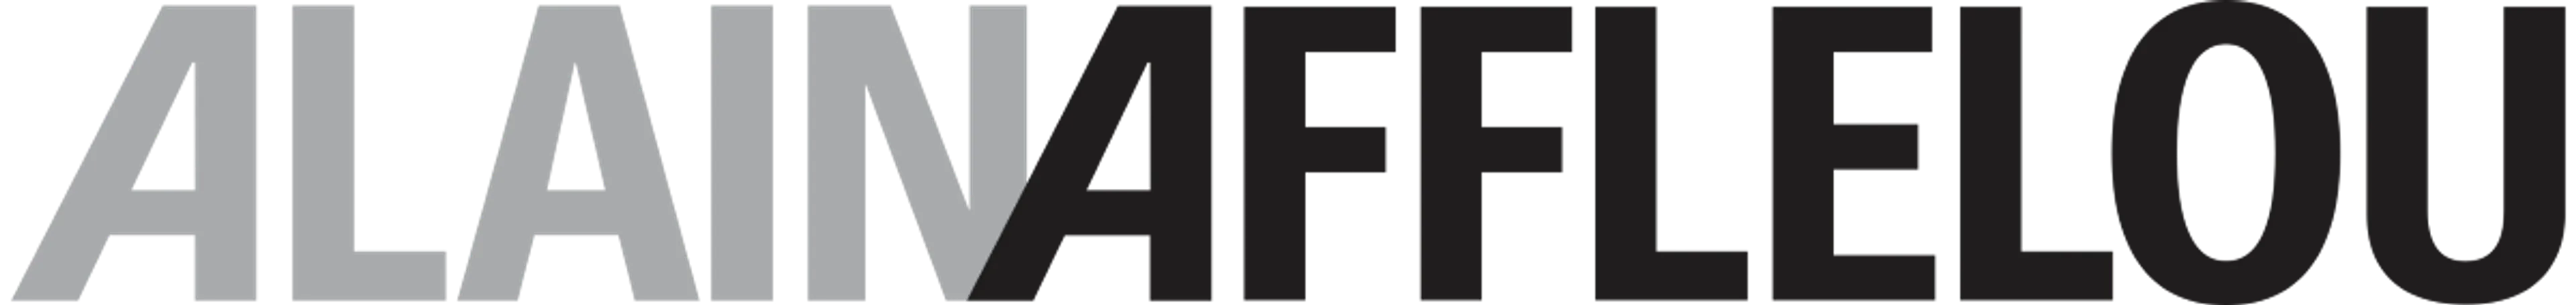 ALAIN AFFLELOU logo